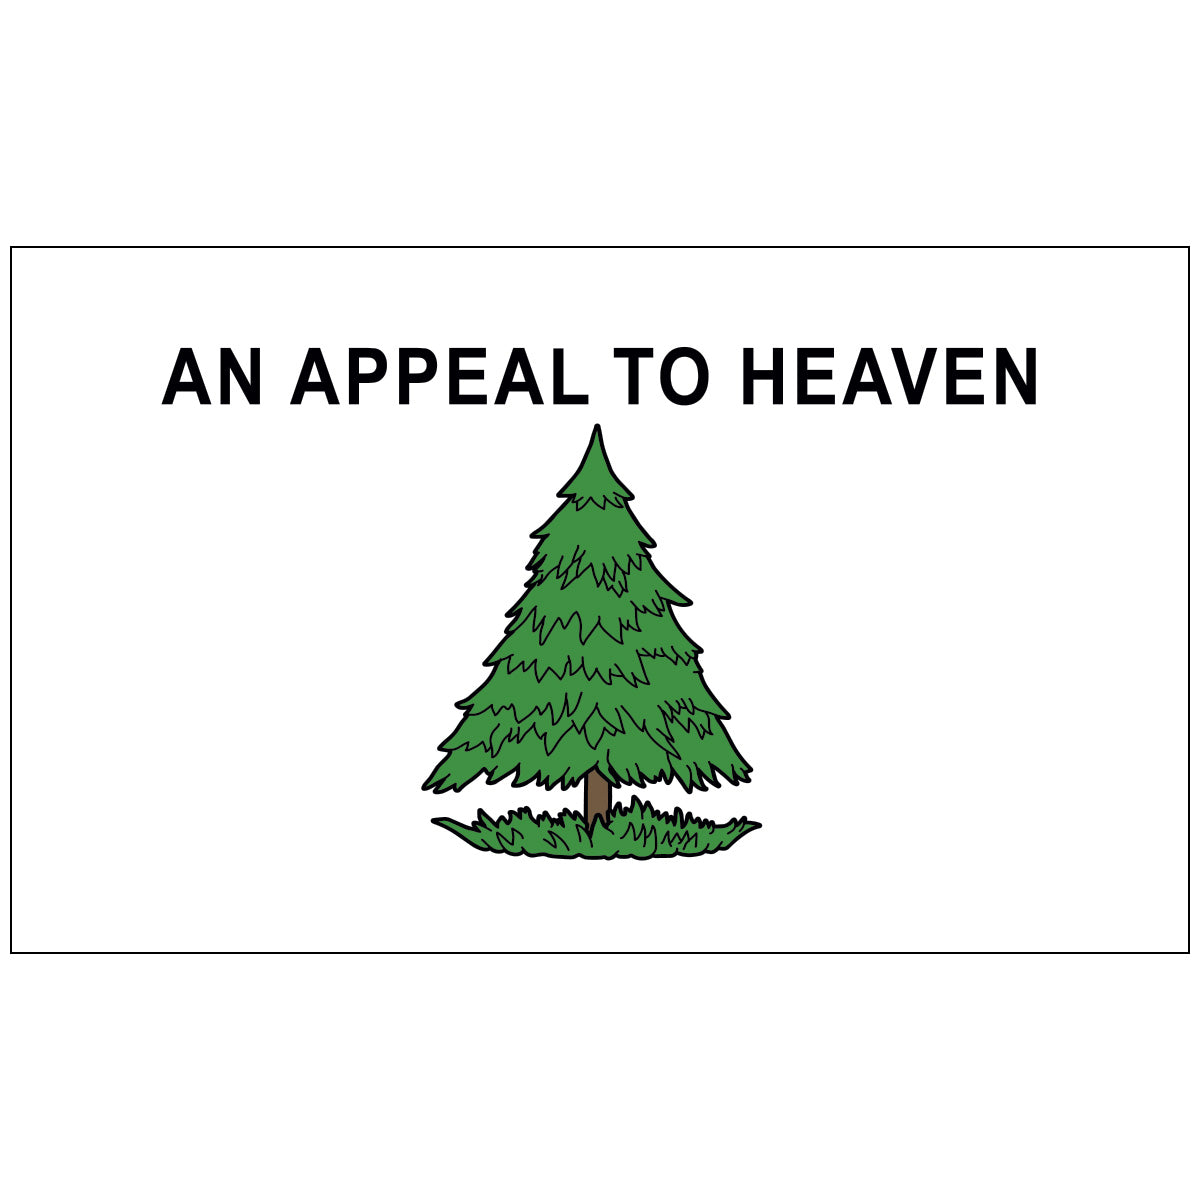 Washington's-Cruisers-Historical-Flag-3x5-White-Pine-Tree-Appeal-to-Heaven-Flagsource-Southeast-Woodstock-Ga